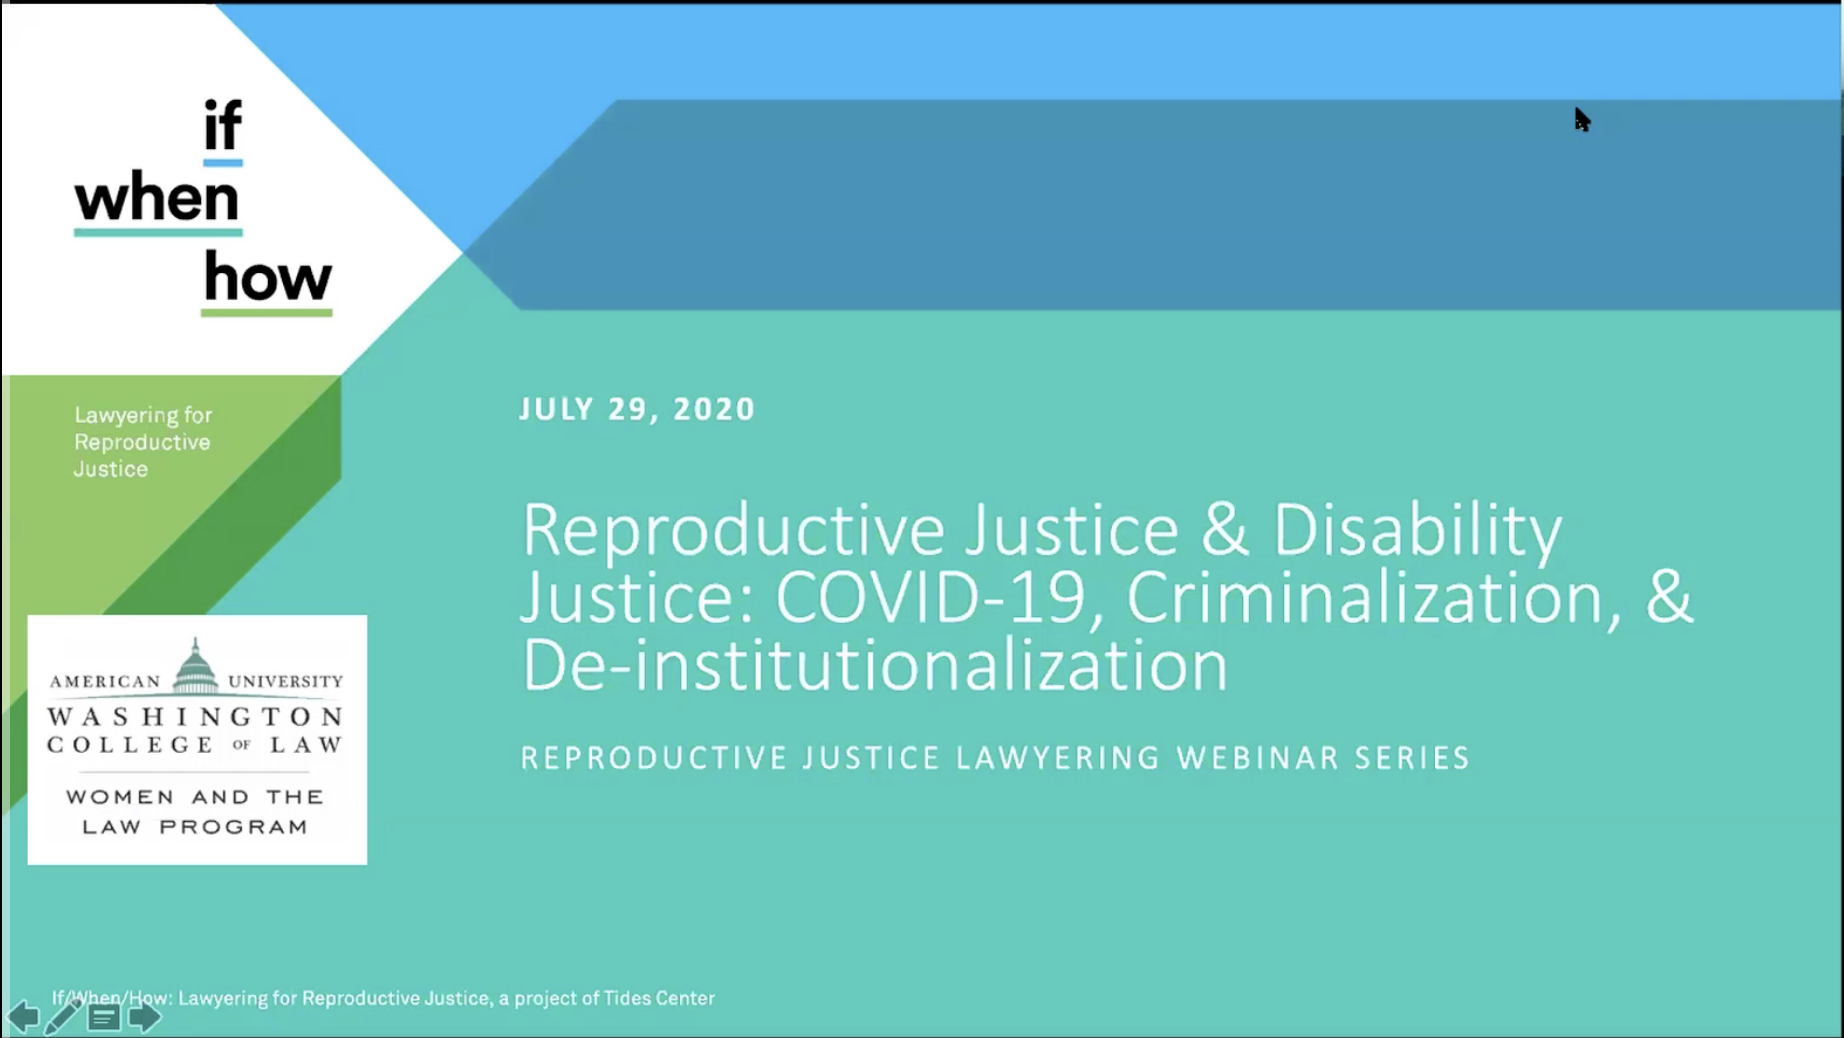 2020 Reproductive Justice Lawyering Webinar Series: Reproductive Justice & Disability Justice: COVID-19, Criminalization, & De-institutionalization Webinar